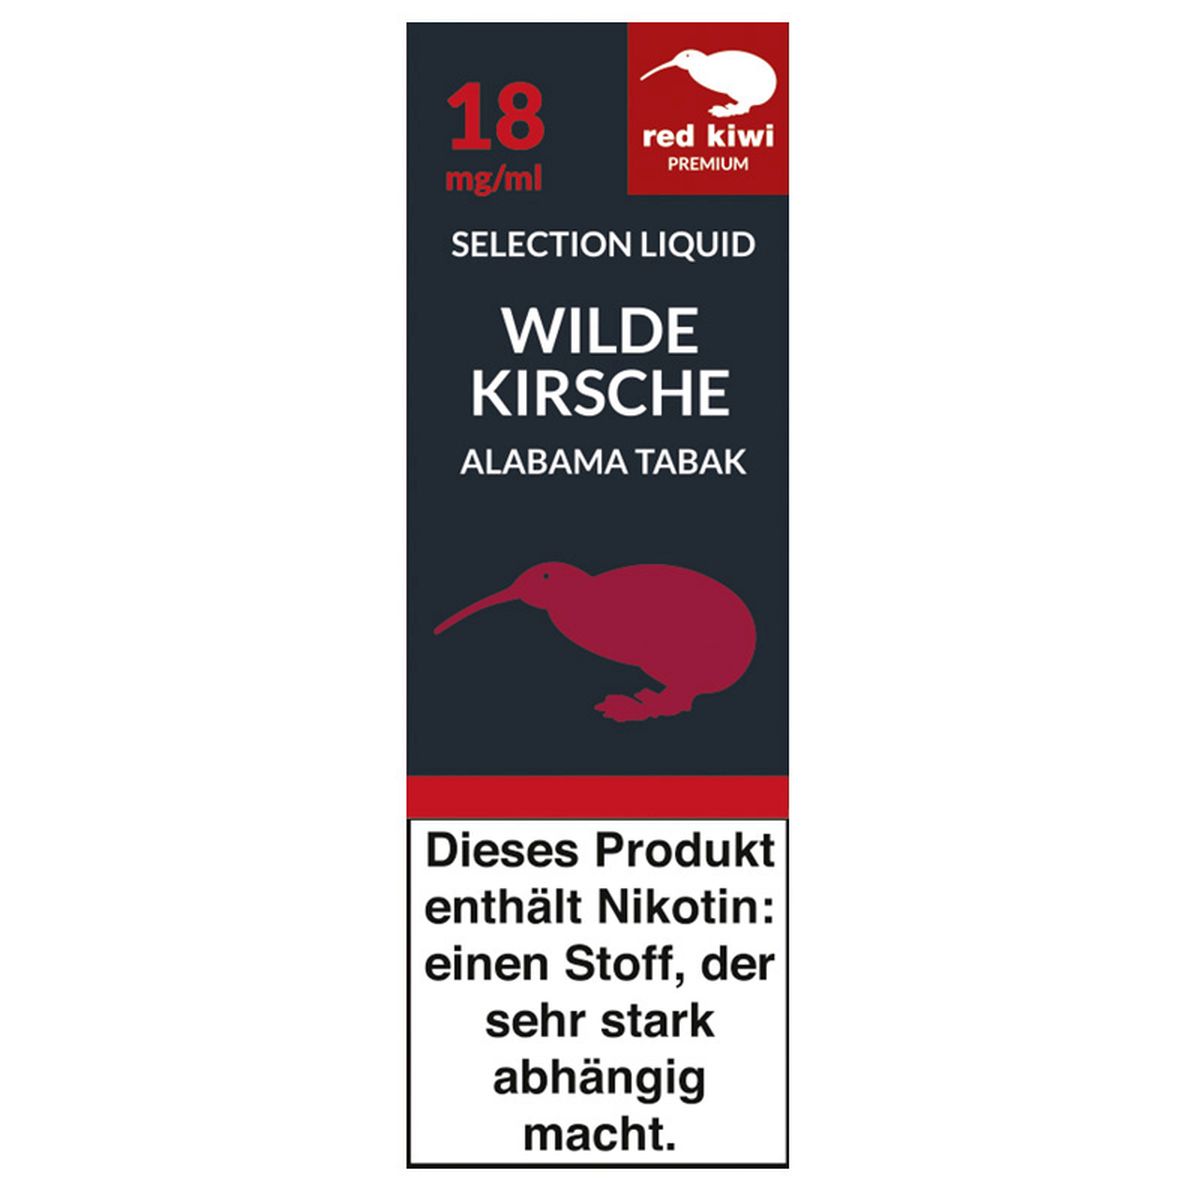 Red Kiwi Red Kiwi eLiquid Selection Wilde Kirsche Alabama Tabak.18mg Nikot bei www.Tabakring.de kaufen